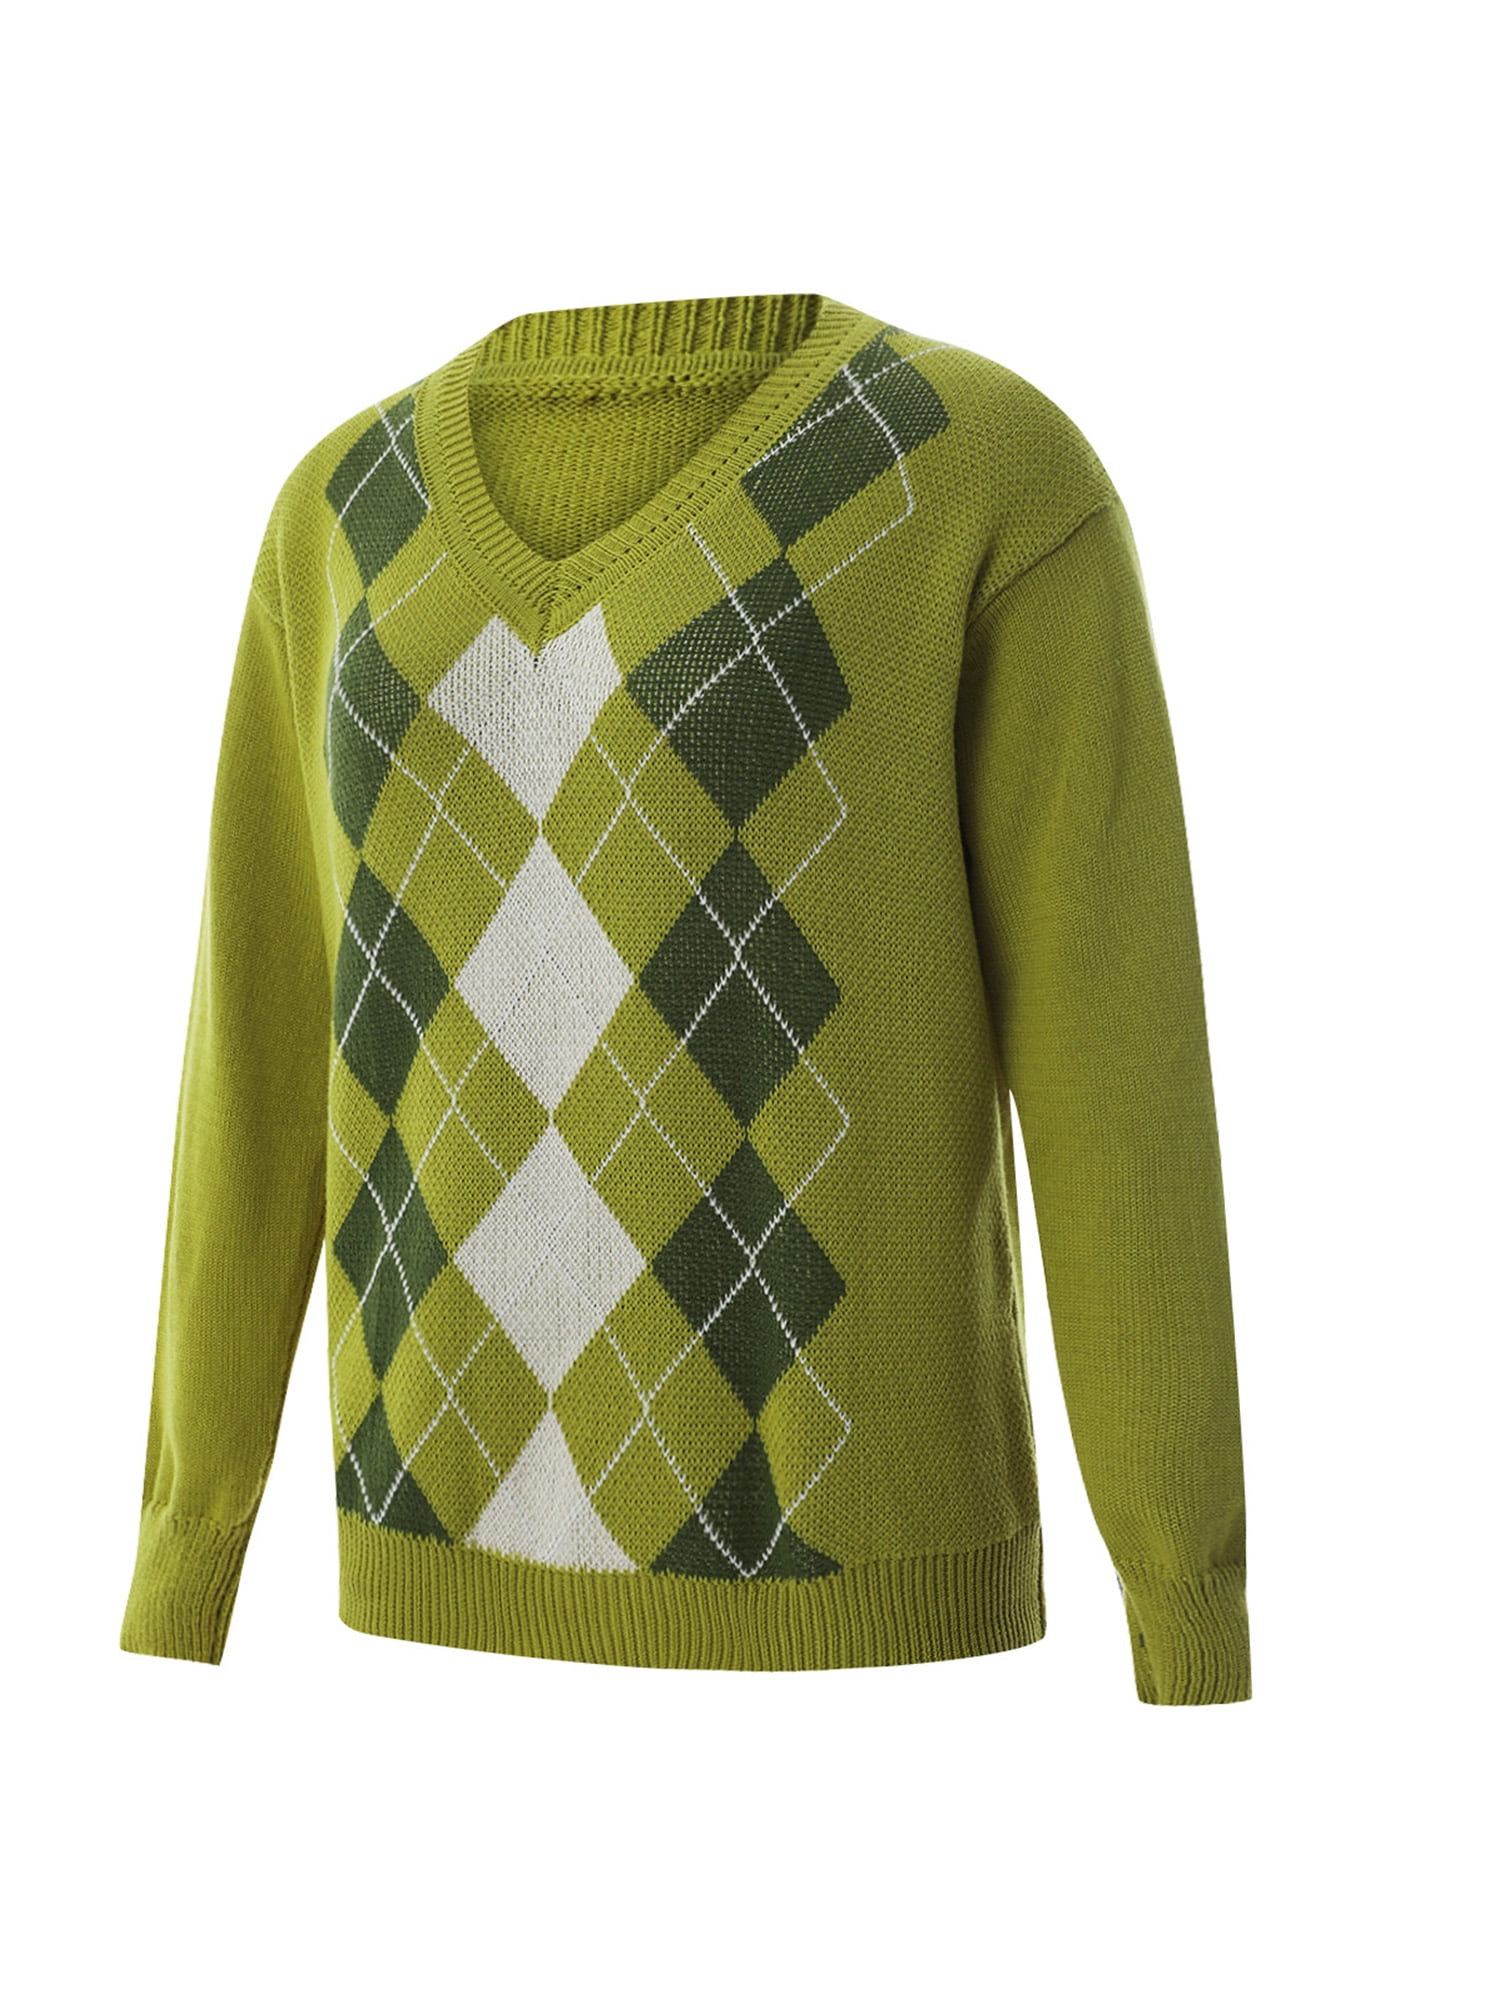 Color Block Sweater Vest, Louis Vuitton Neverfull and Gucci Belt